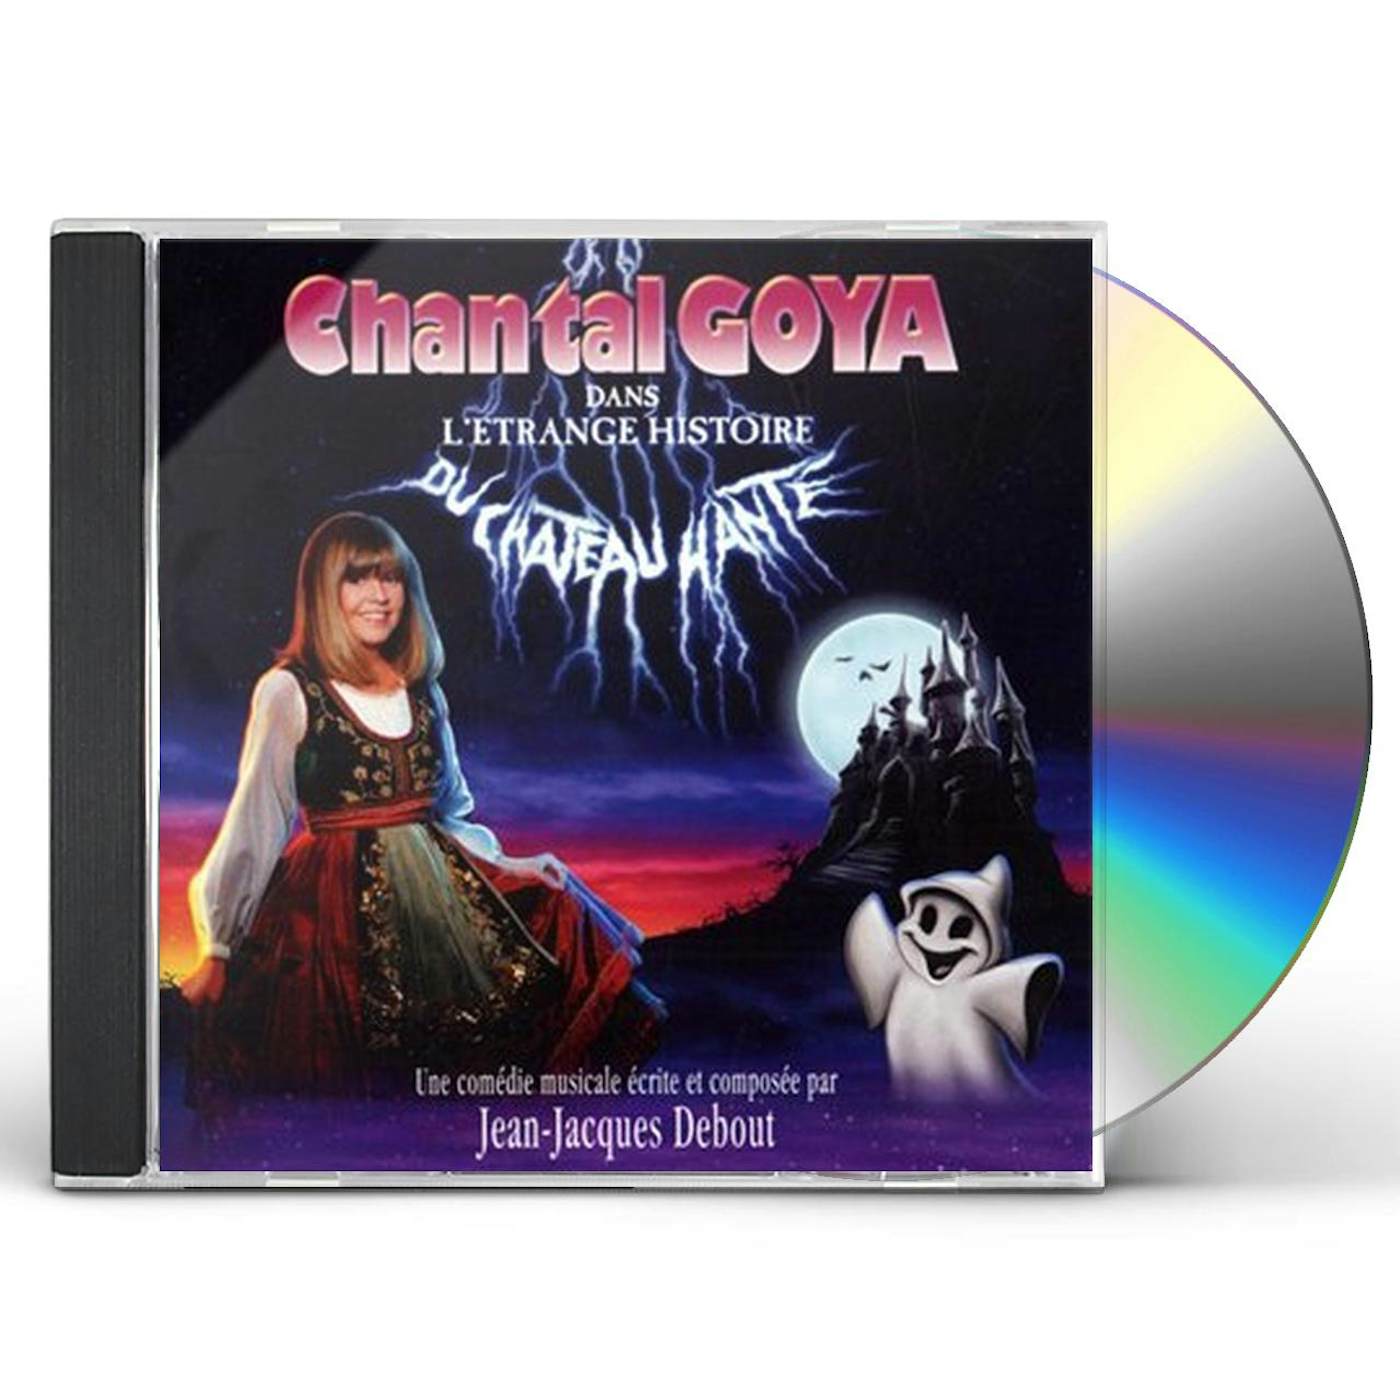 Chantal Goya L'ETRANGE HISTOIRE DU CHATEAU HANTE CD